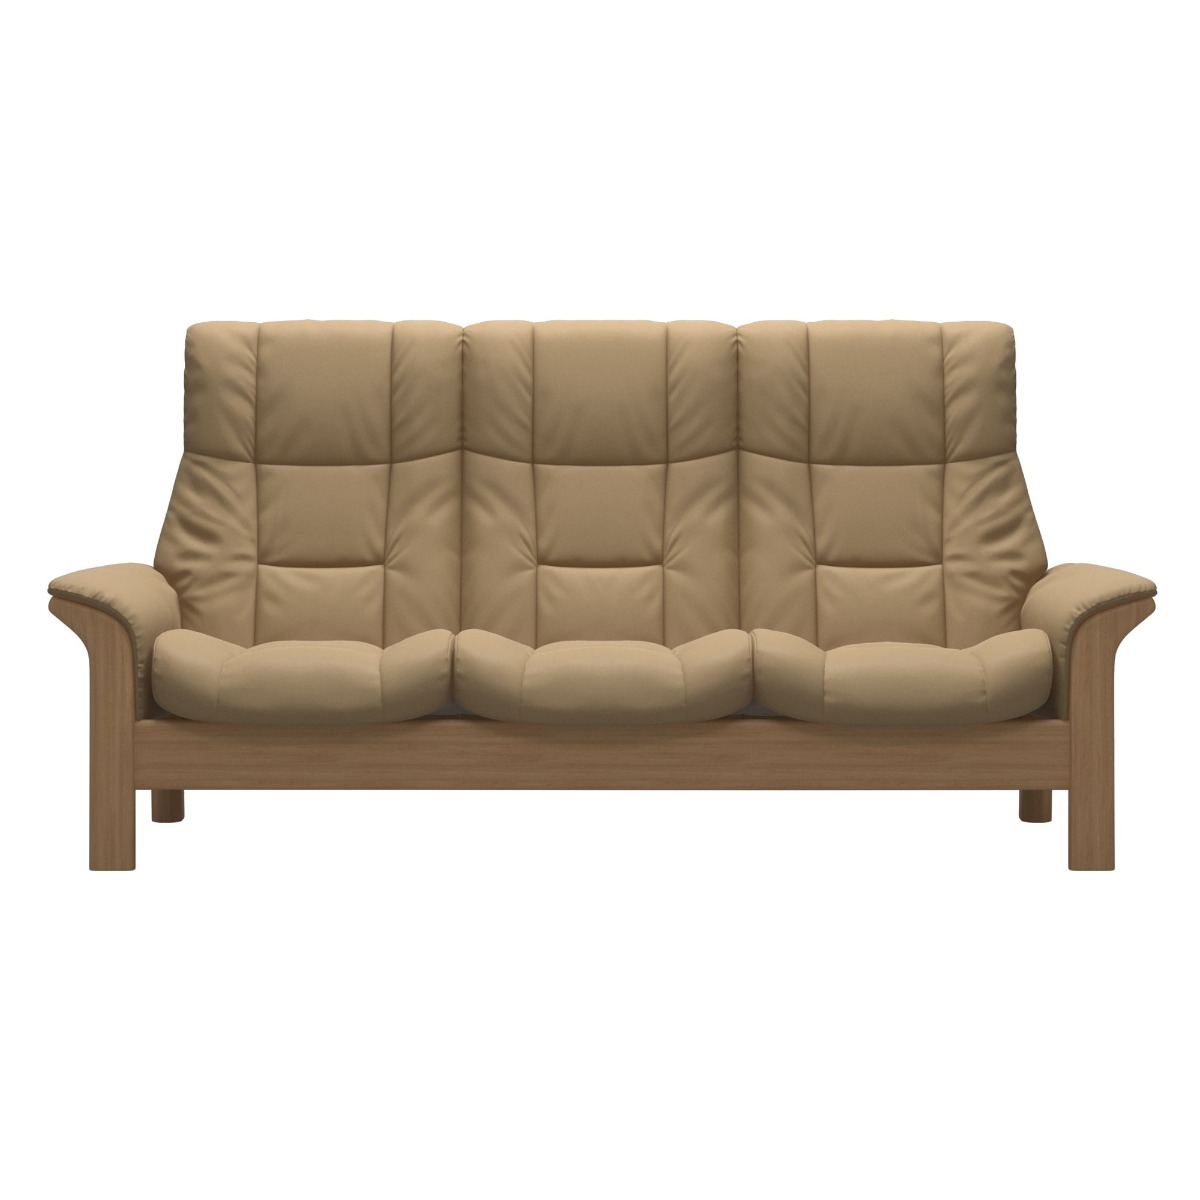 Stressless Windsor High Back 3 Seater Recliner Sofa, Neutral Leather | Barker & Stonehouse